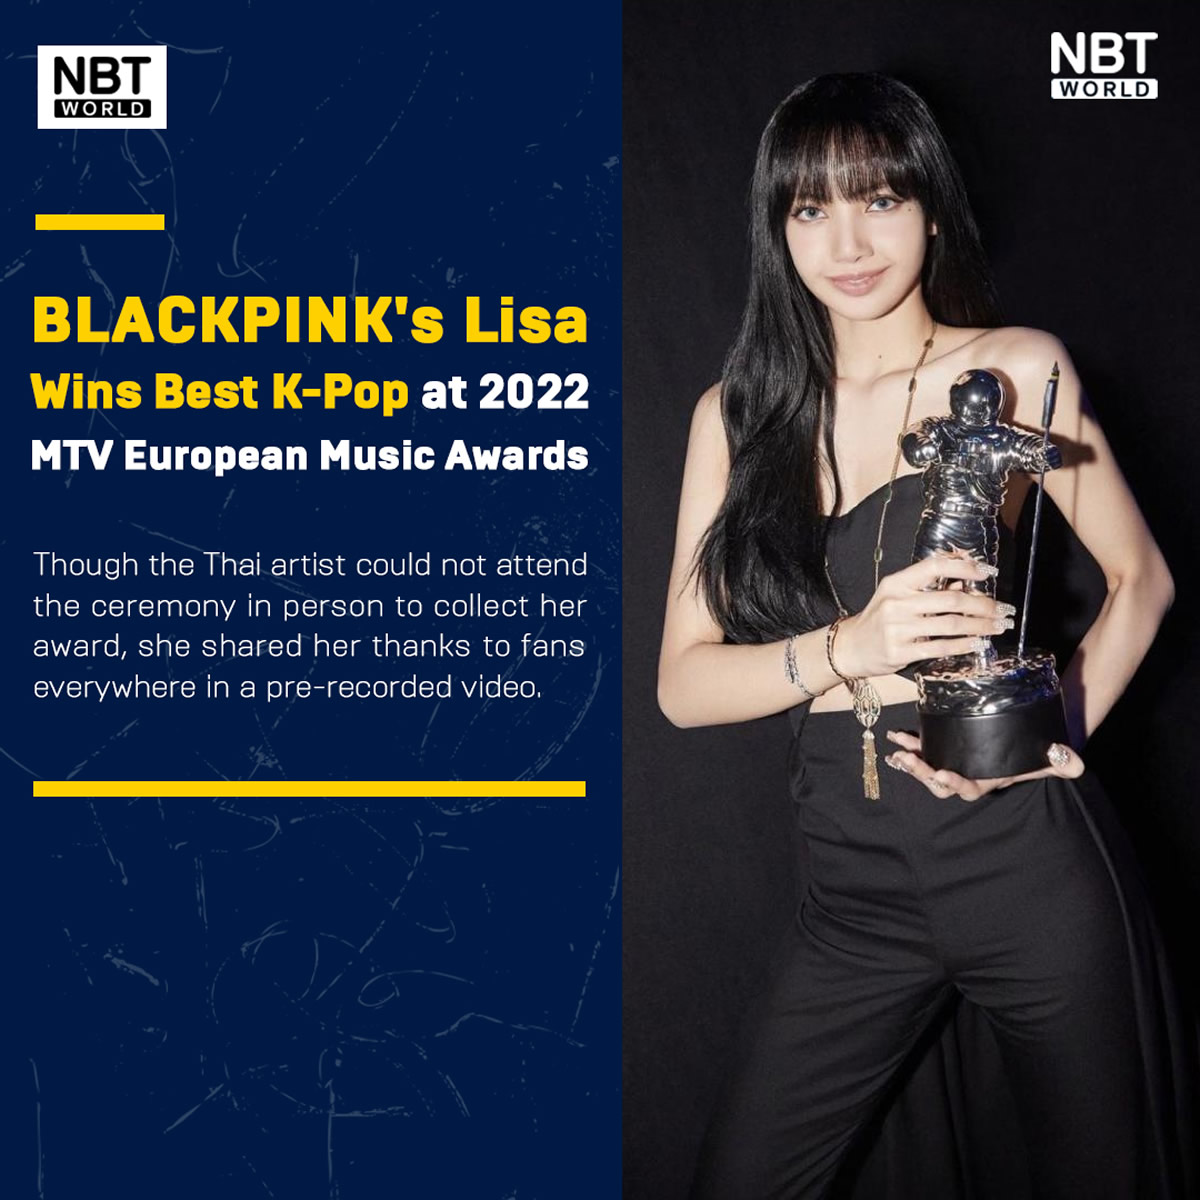 BLACKPINKリサ「2022 MTV European Music Awards」でベストK-POP賞を受賞